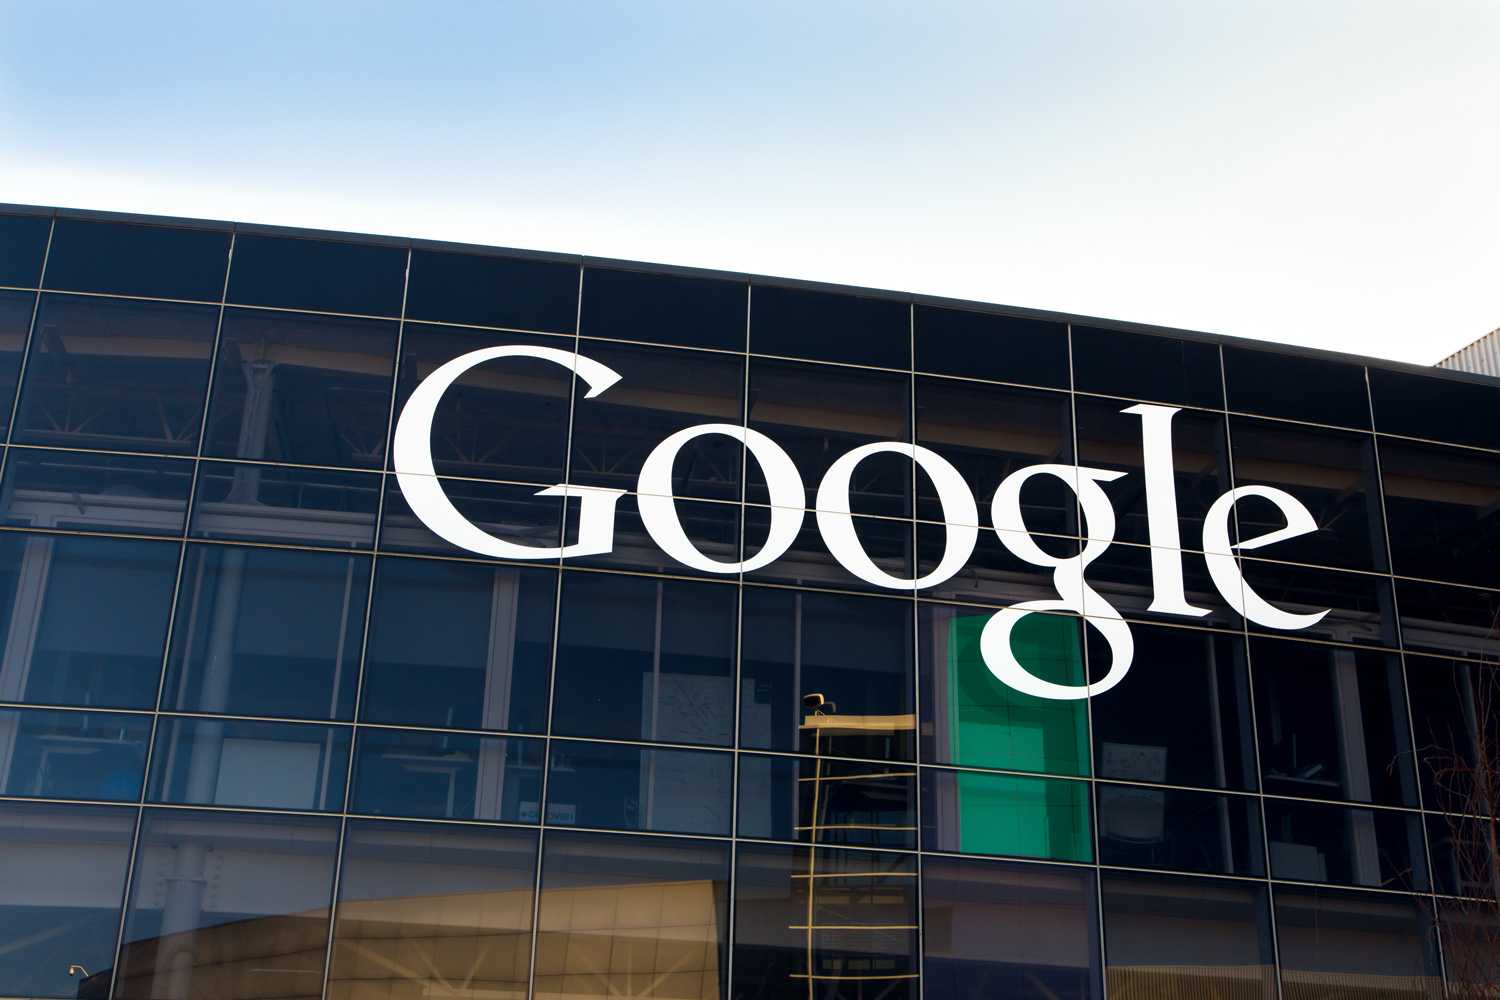 Why Google Take-Down more than 1 Million Websites?